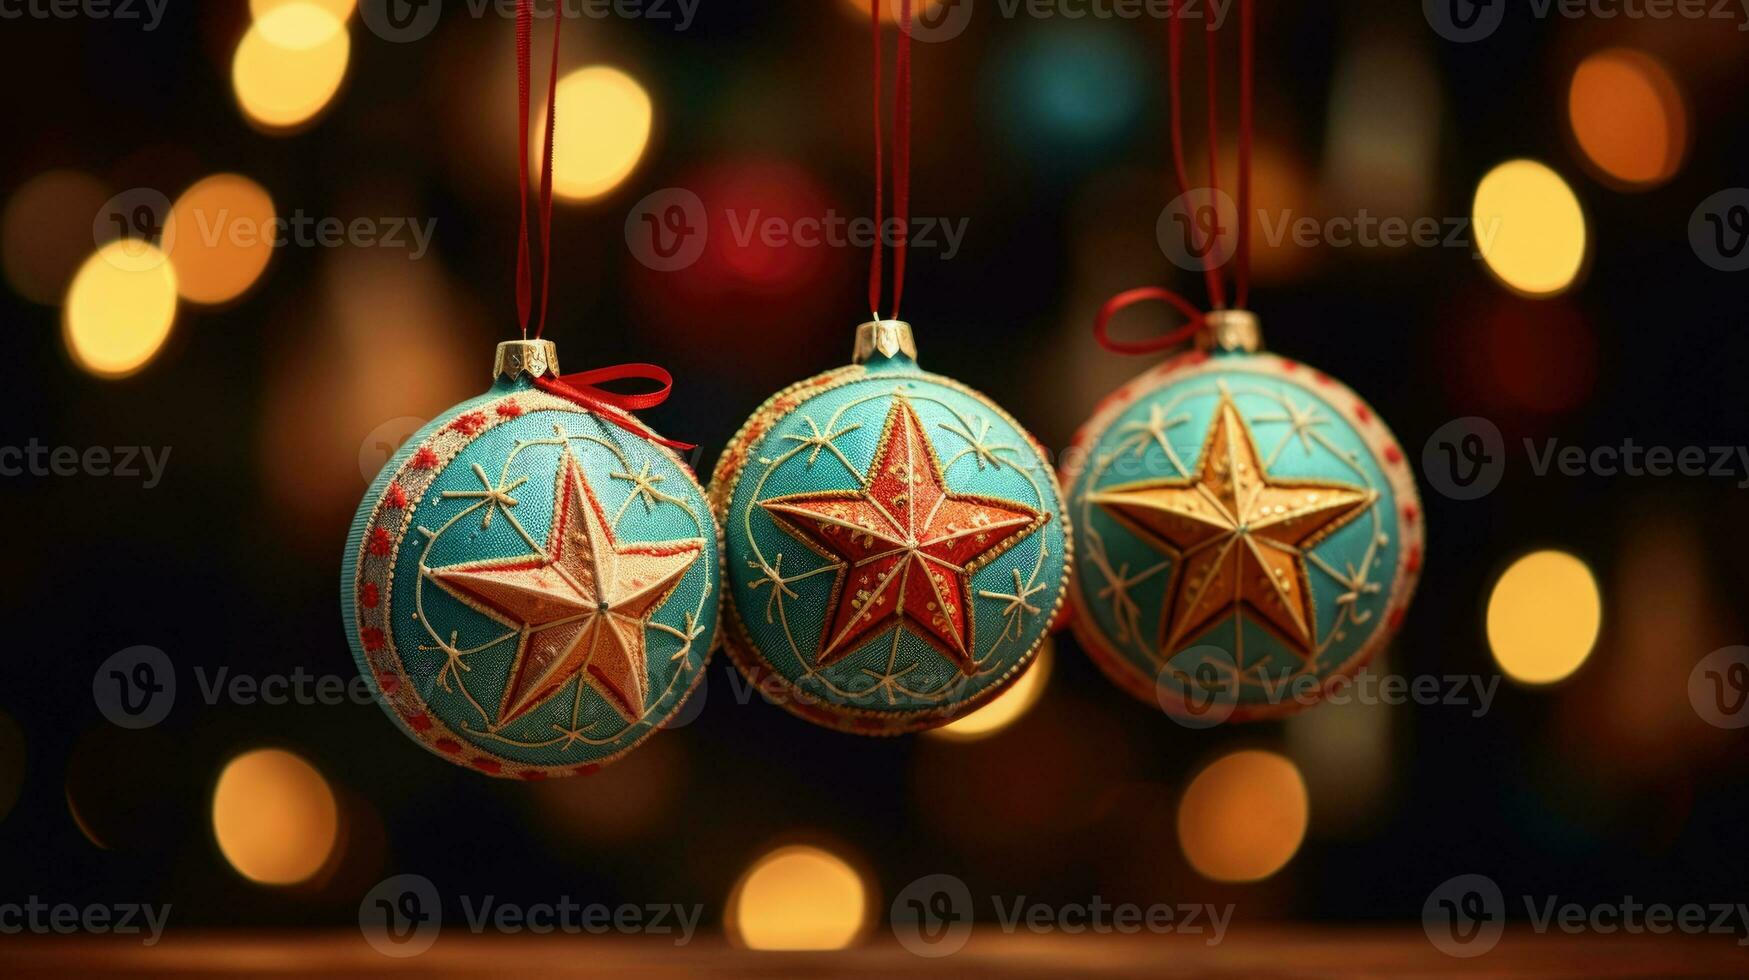 AI generated Christmas ornaments decoration photo